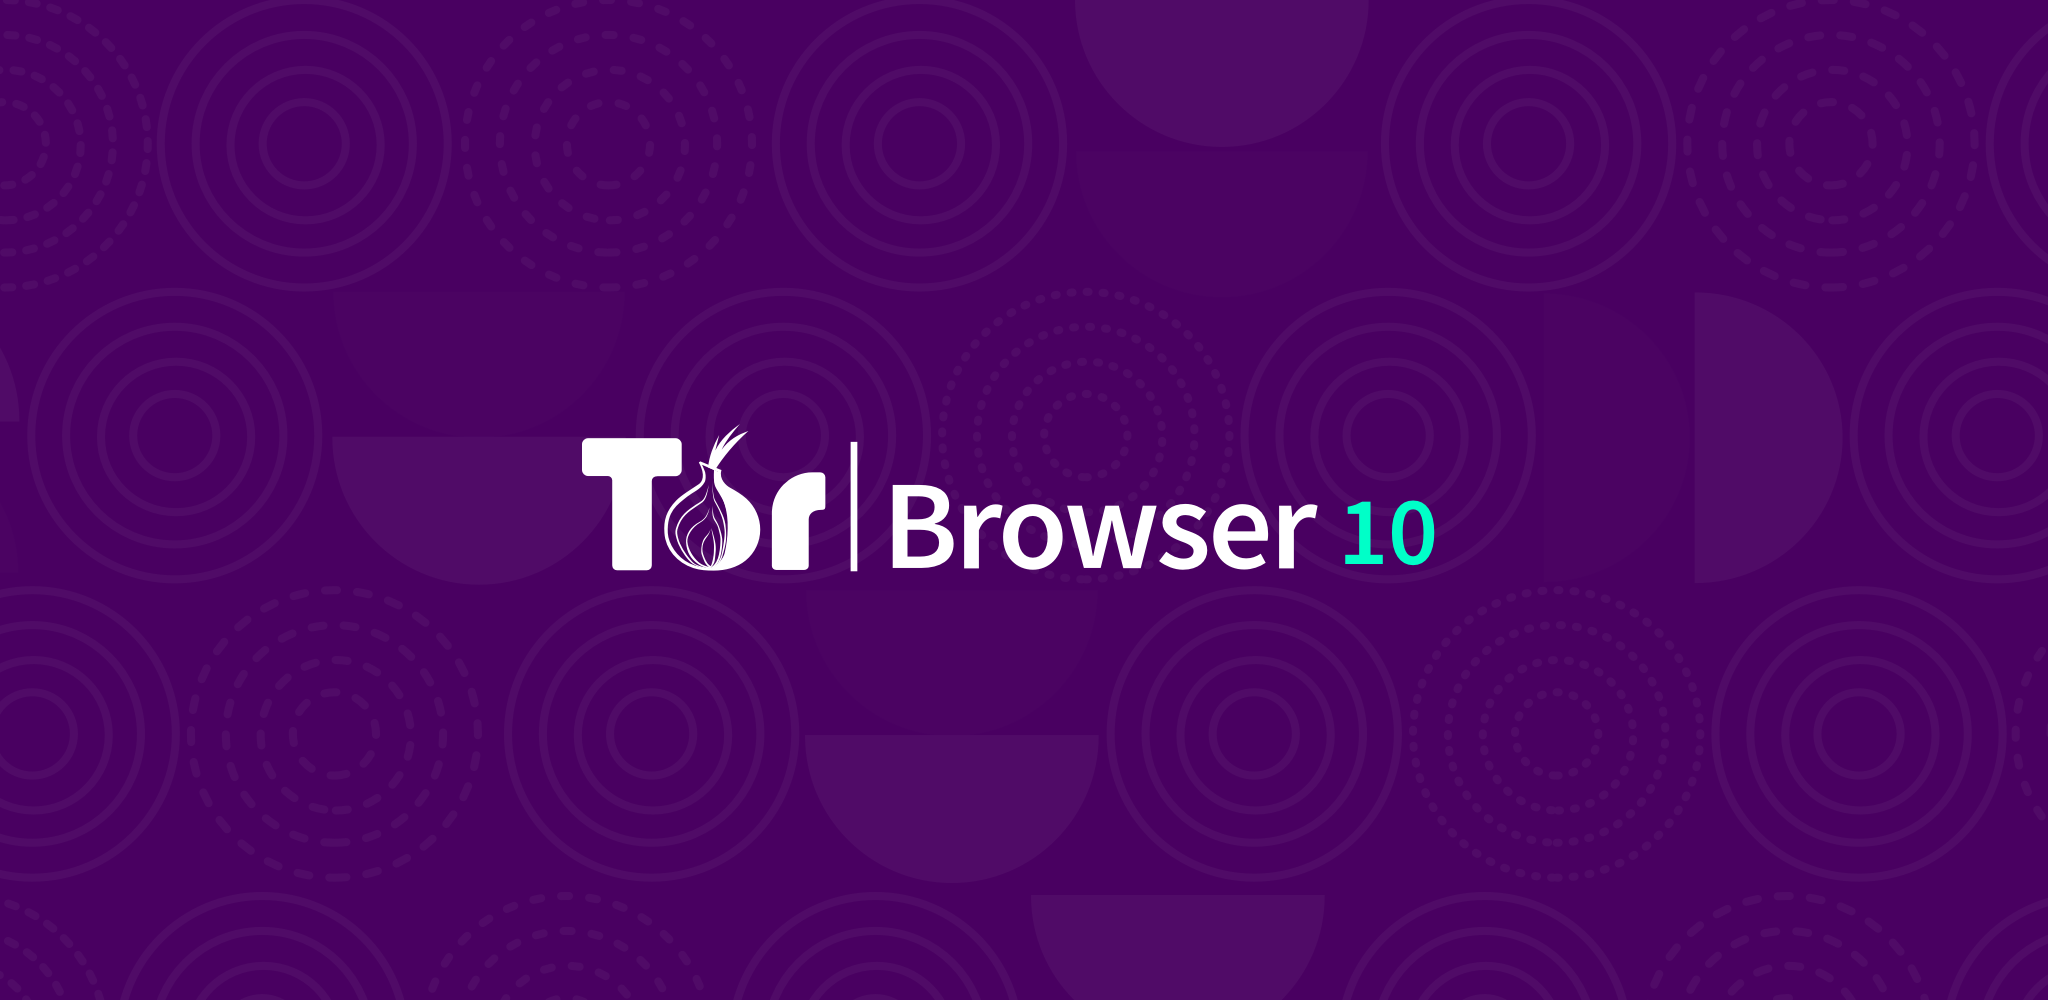 tor browser mint 17 hydra